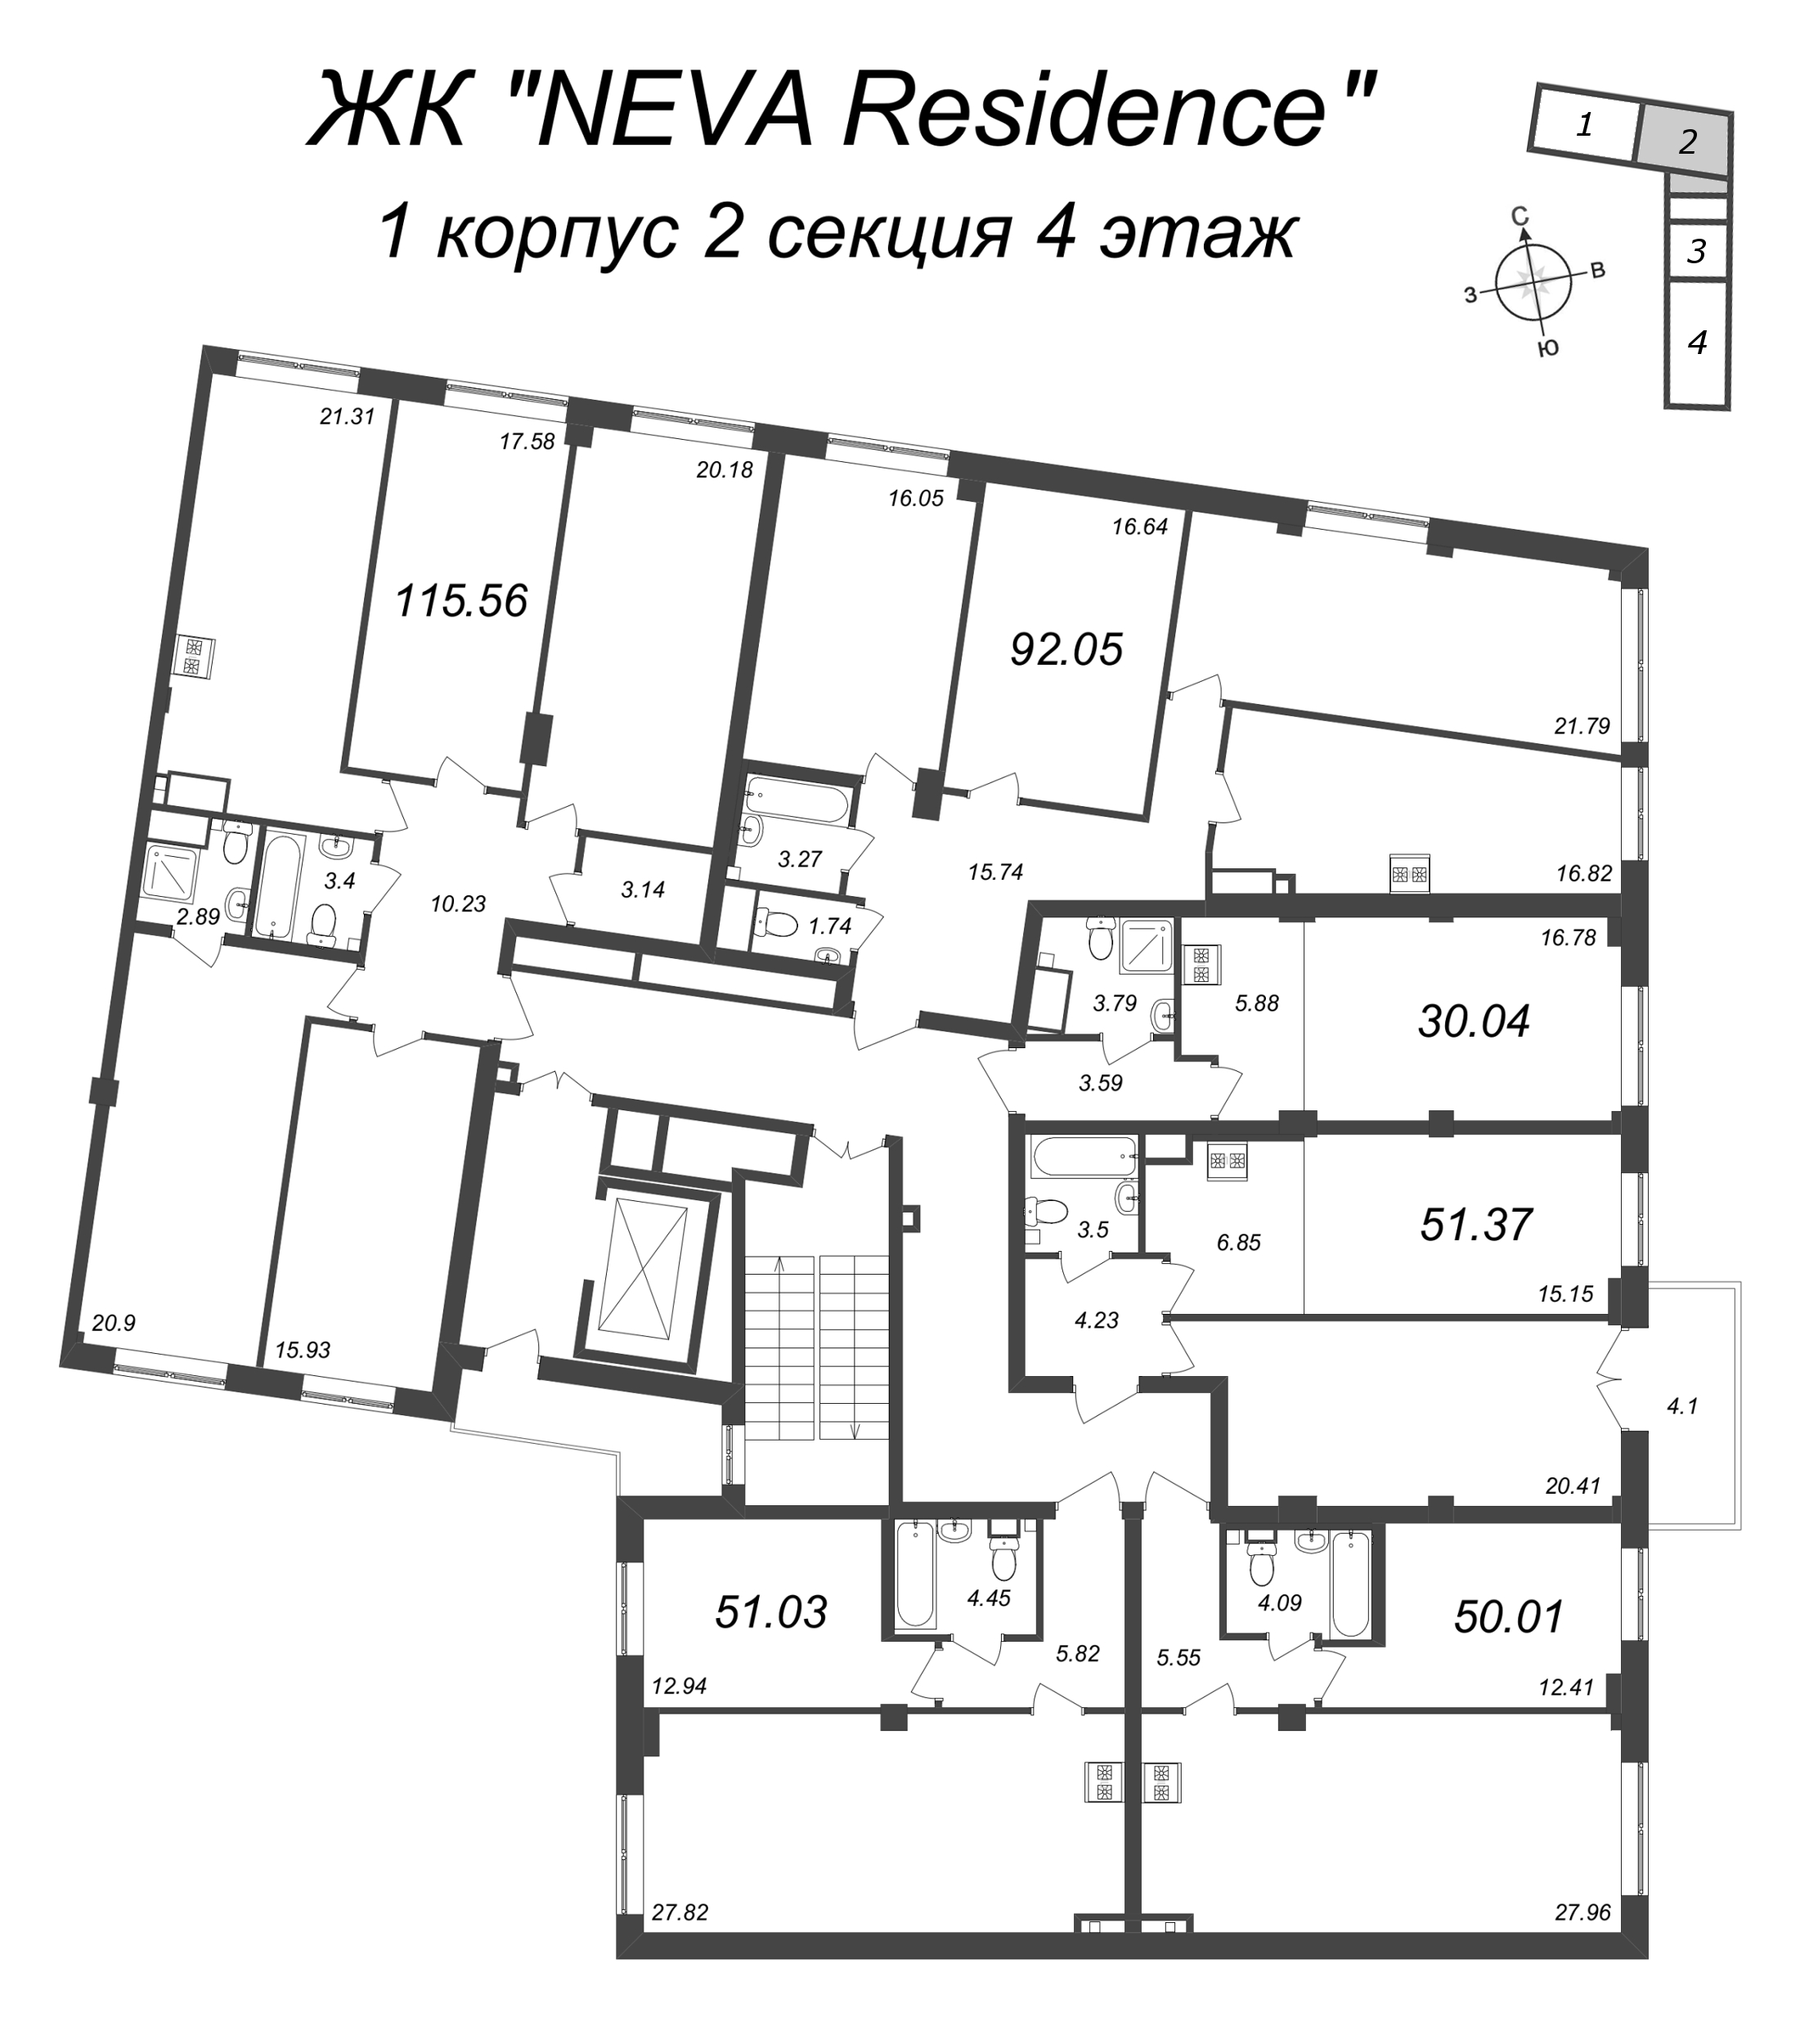 4-комнатная (Евро) квартира, 92.05 м² - планировка этажа